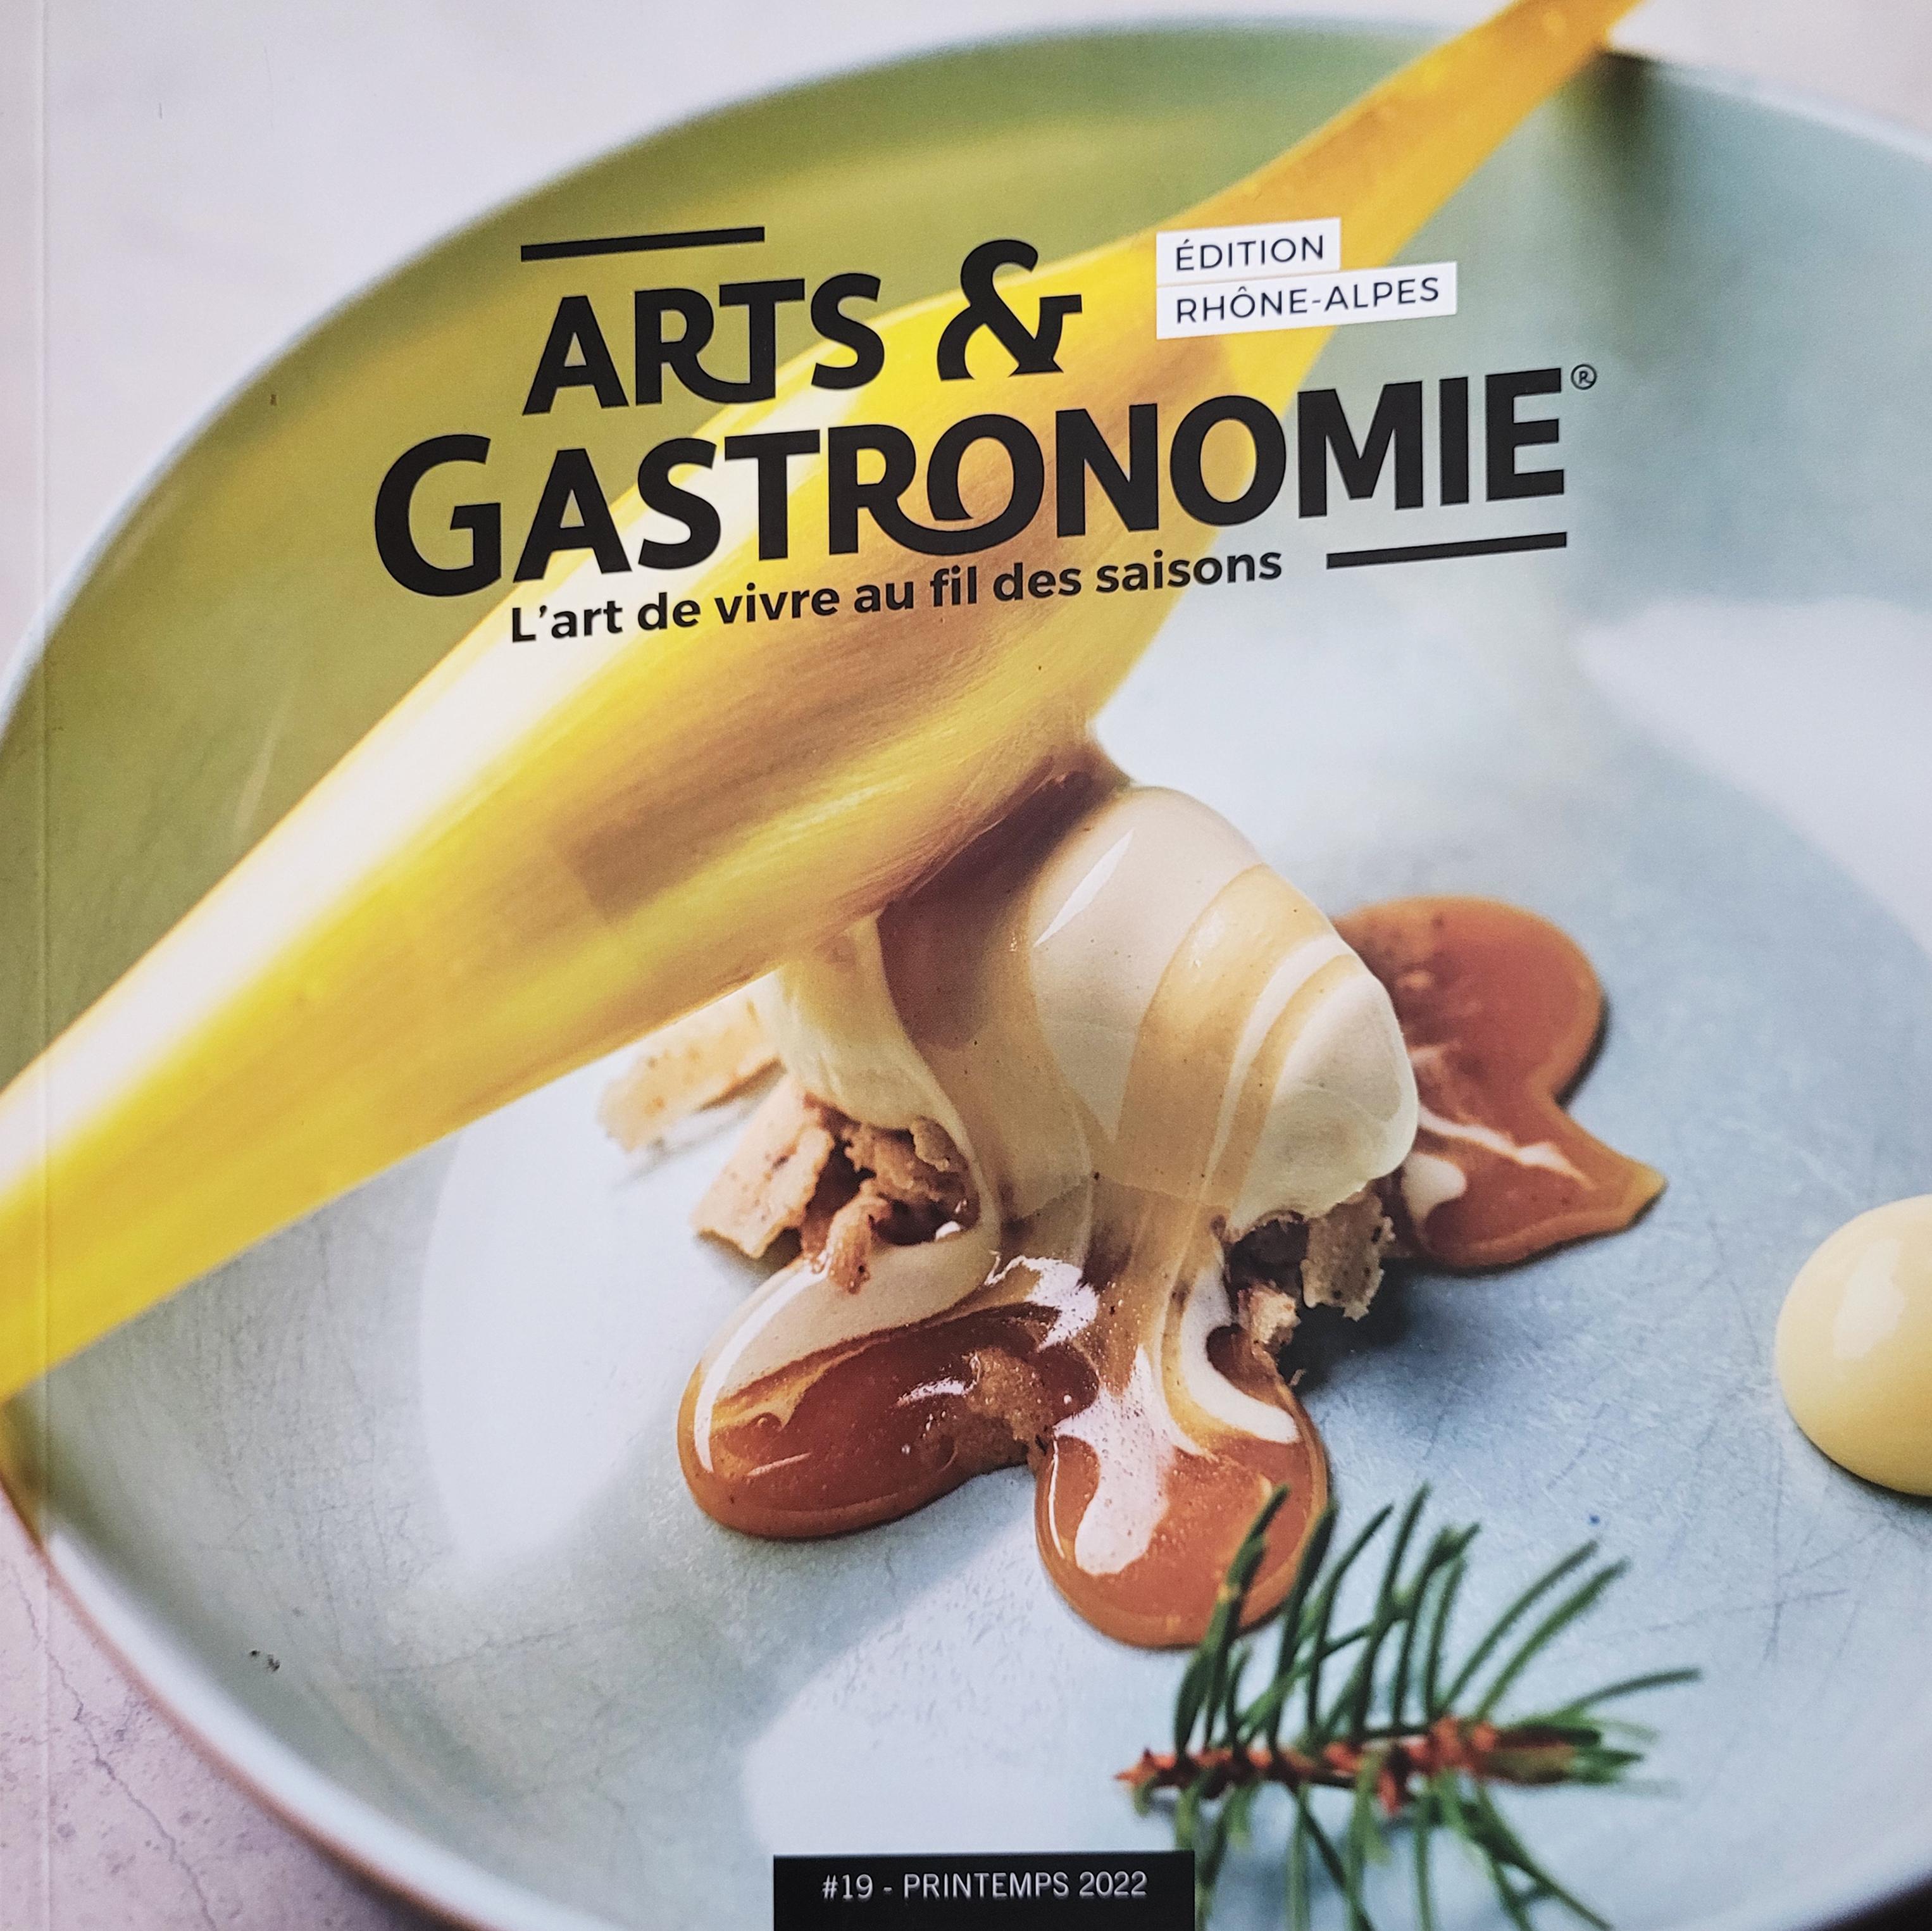 Art & Gastronomie